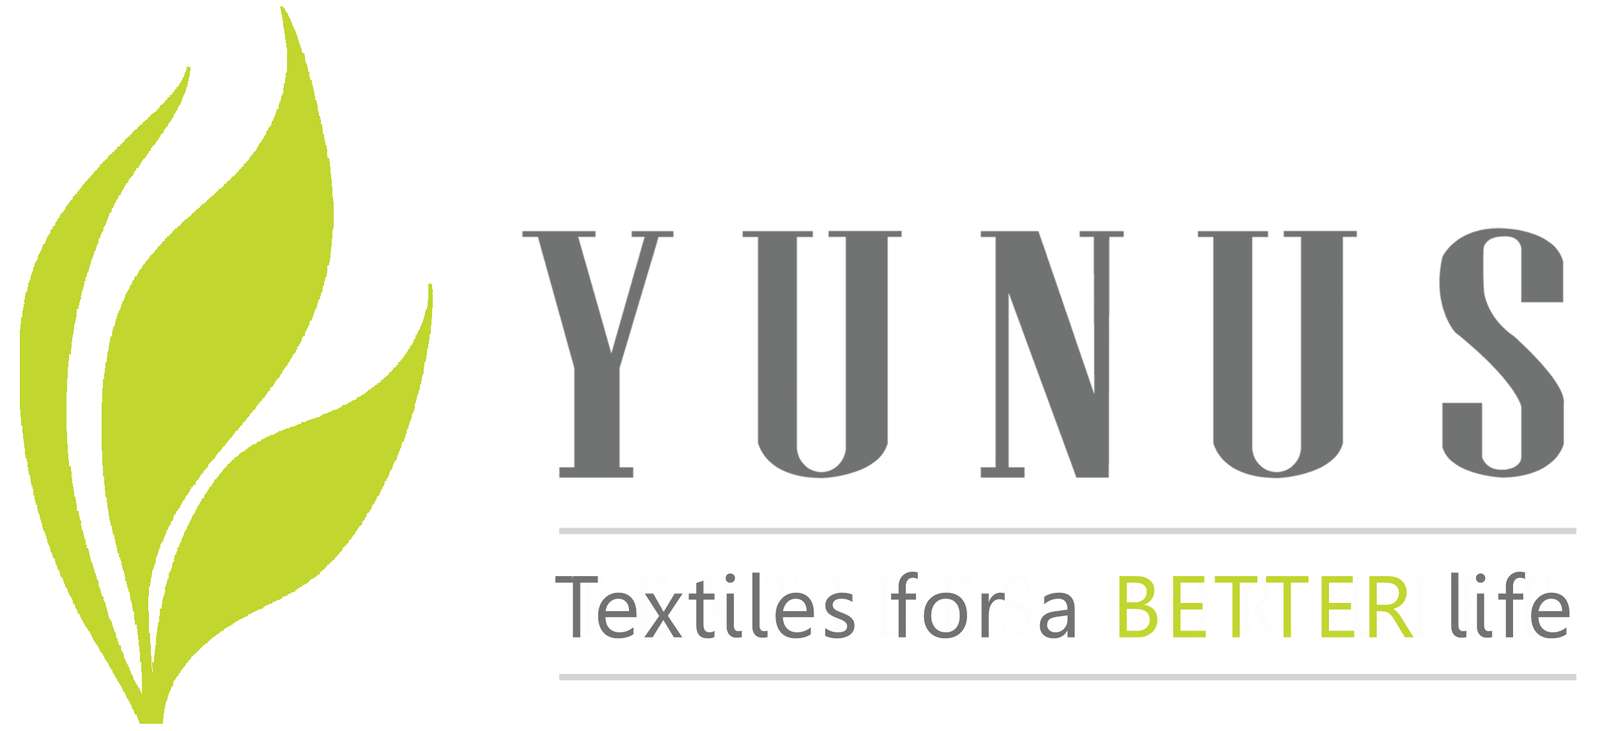 YTML-logotyp pussel online från foto